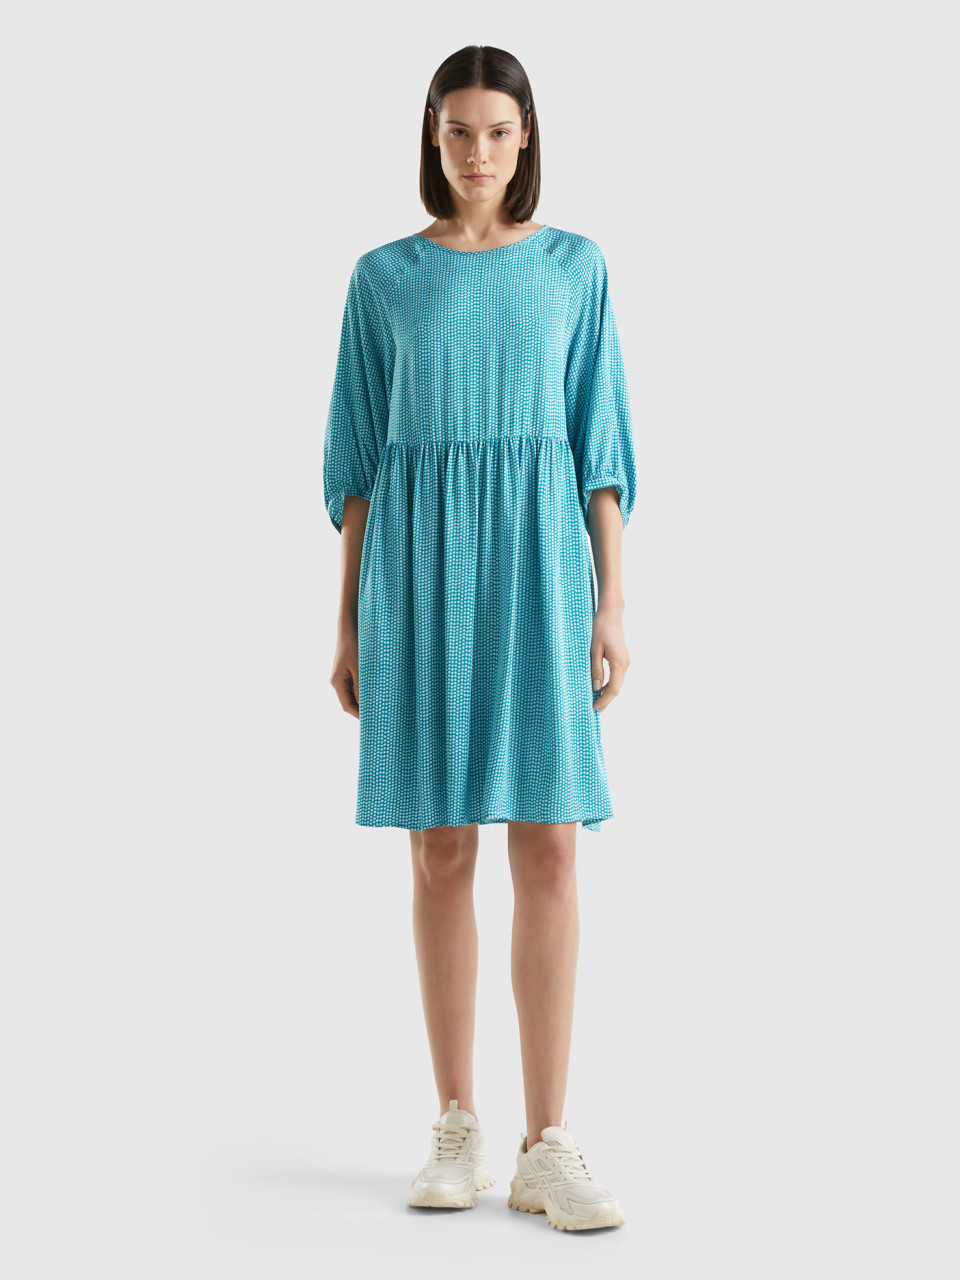 Benetton, Short Patterned Dress, Teal, Women